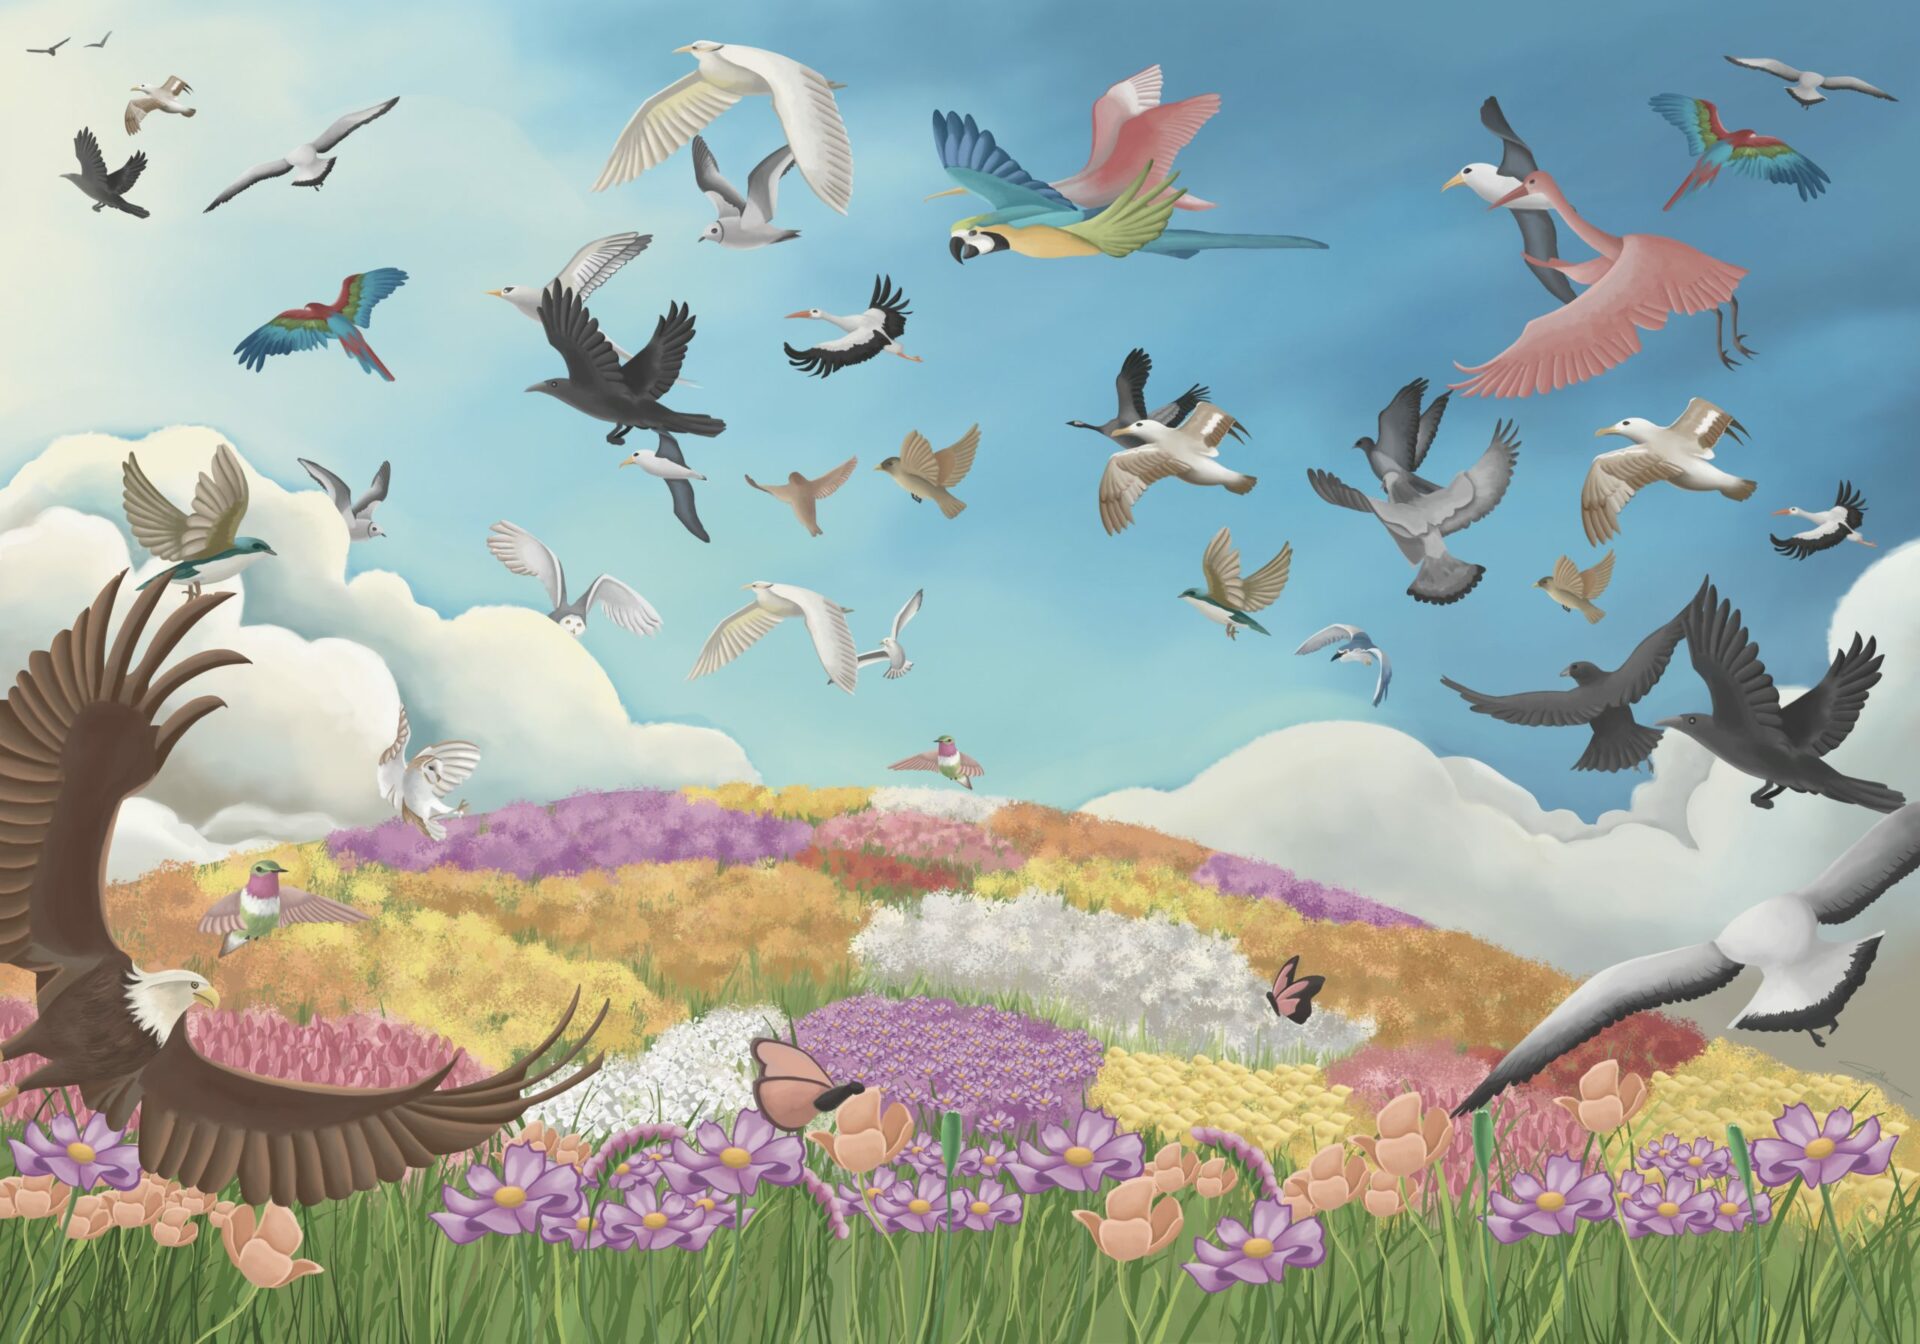 Illustration amazing birds by Cynthia Artstudio